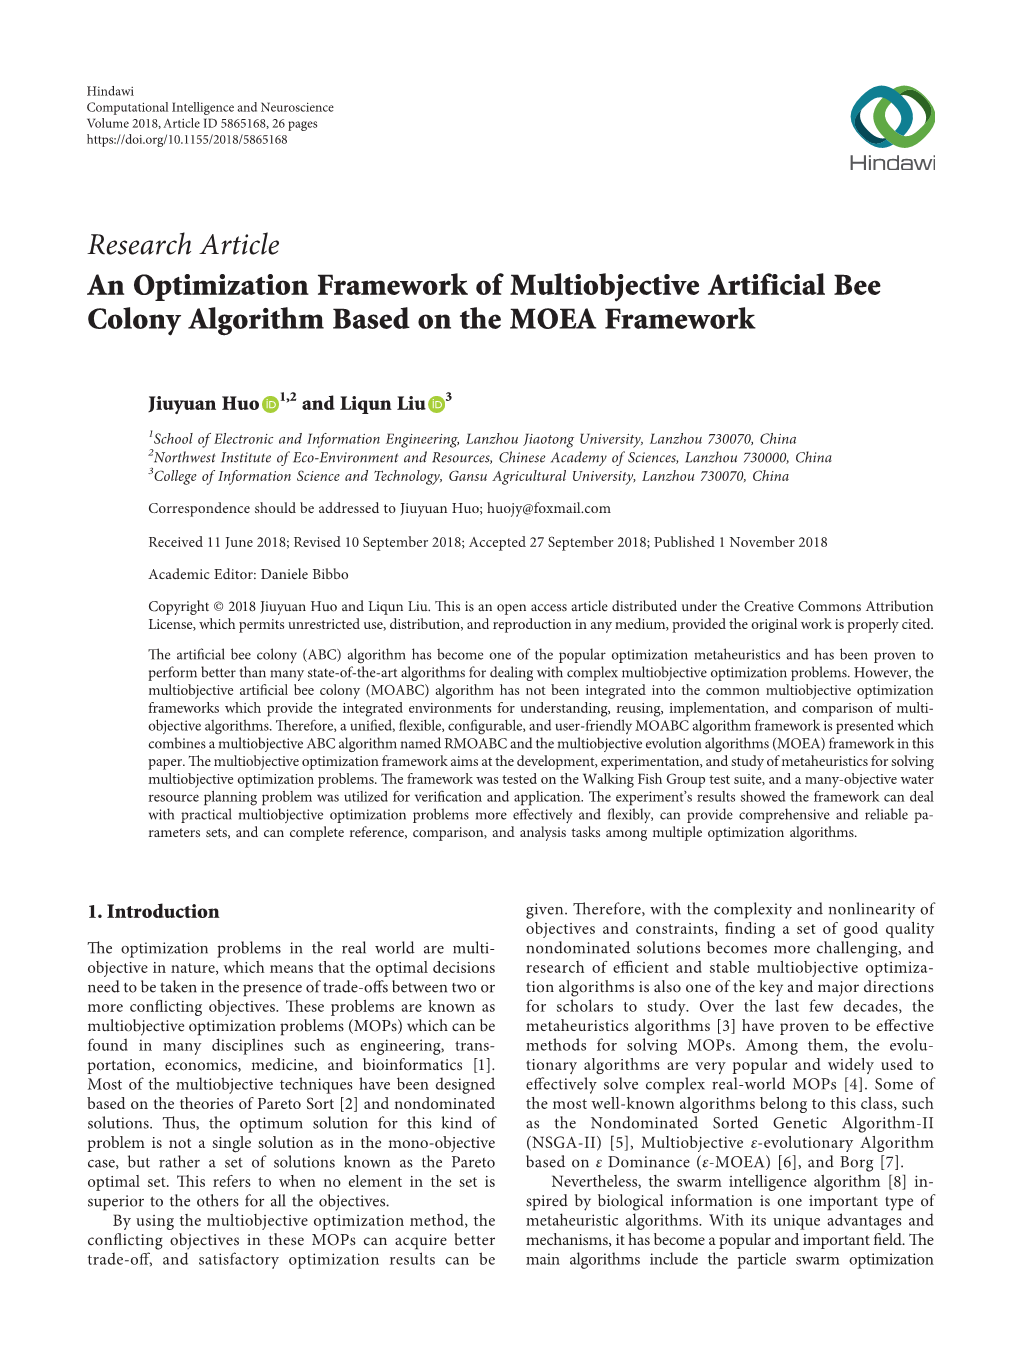 An Optimization Framework of Multiobjective Artificial Bee Colony Algorithm Based on the MOEA Framework